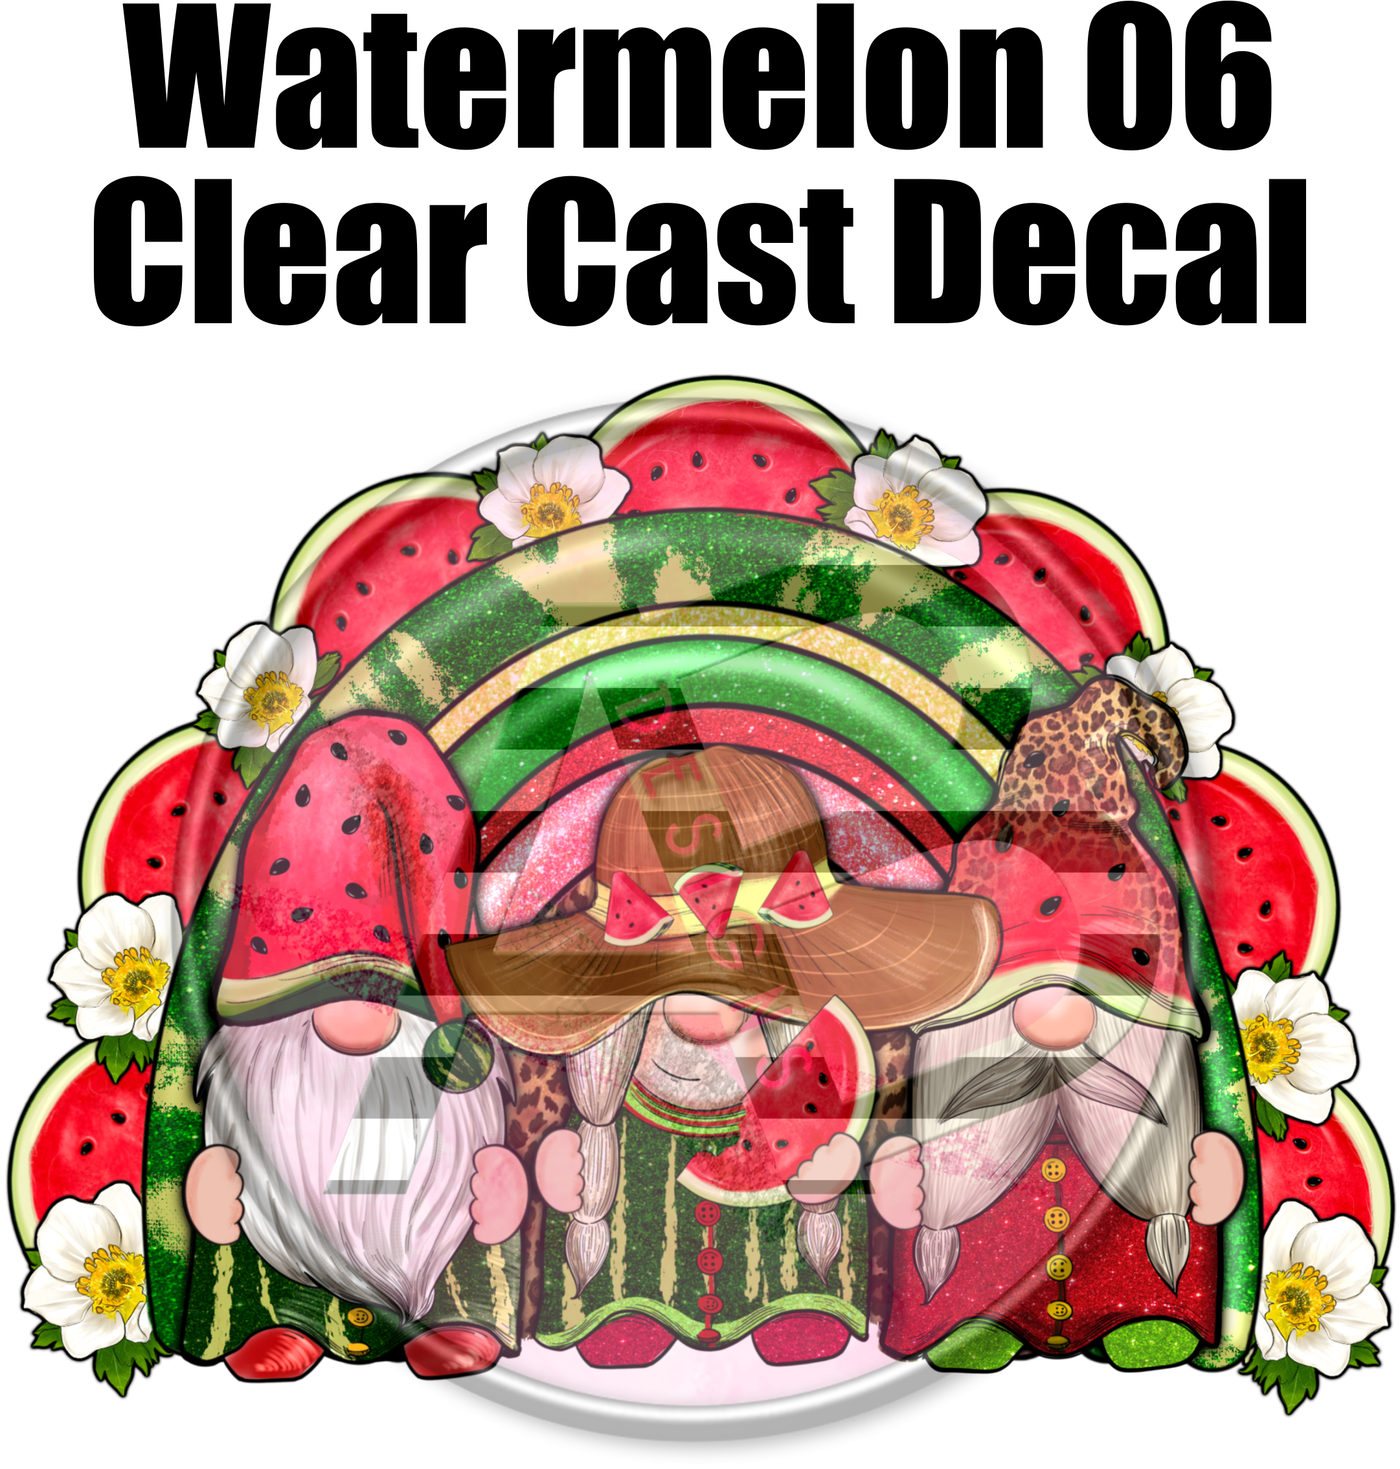 Watermelon 06 - Clear Cast Decal